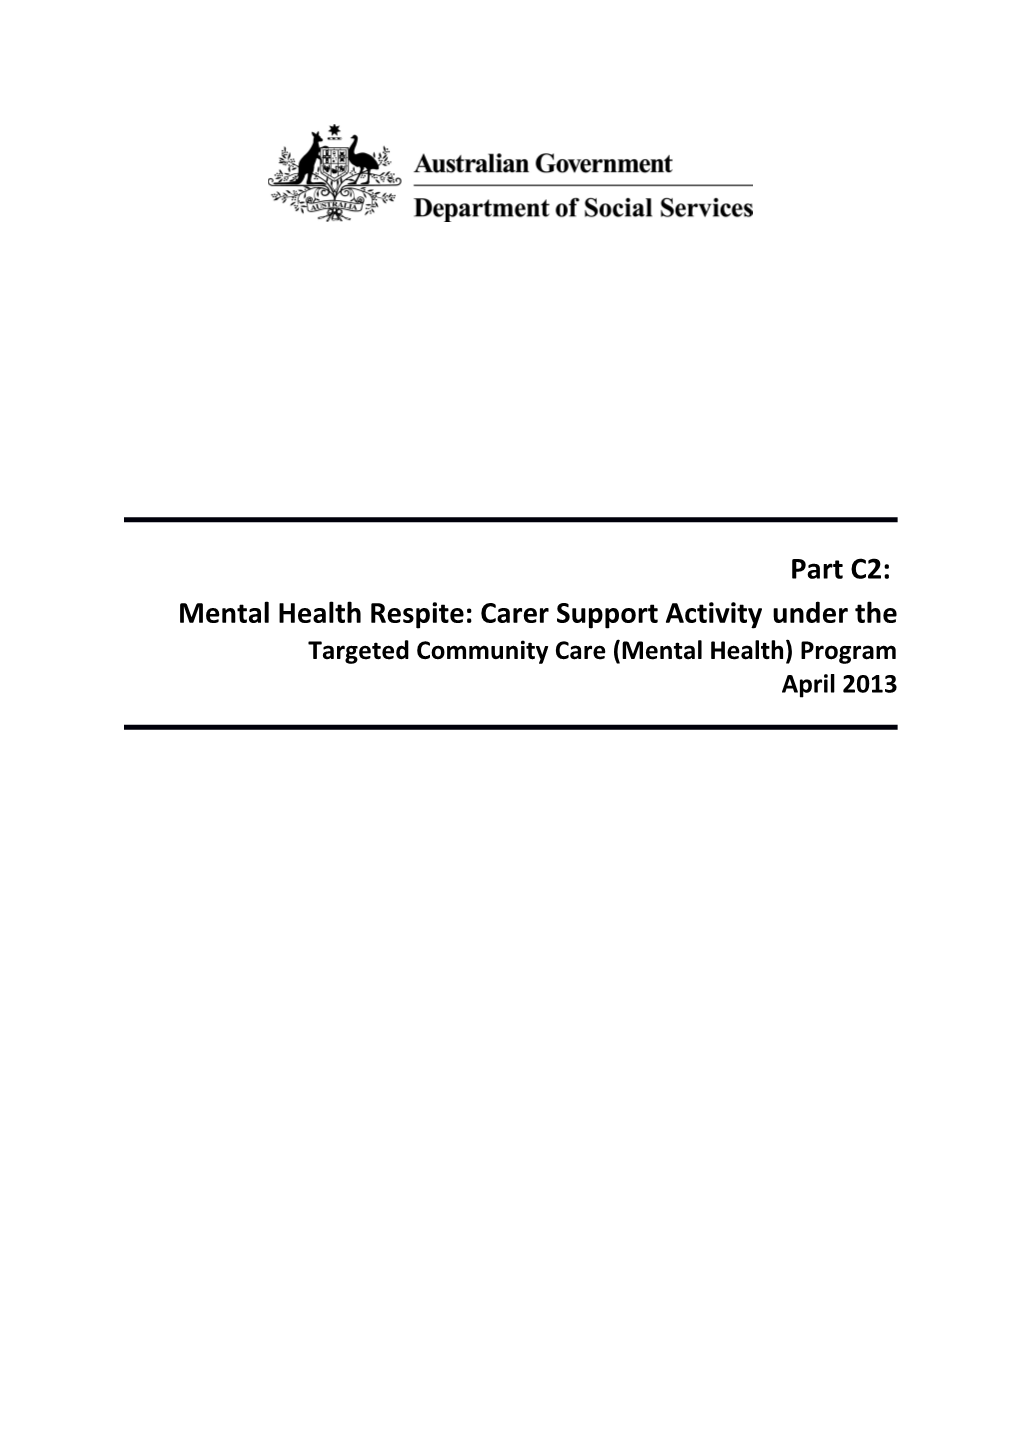 Mental Health Respite: Carer Support Activityunder The